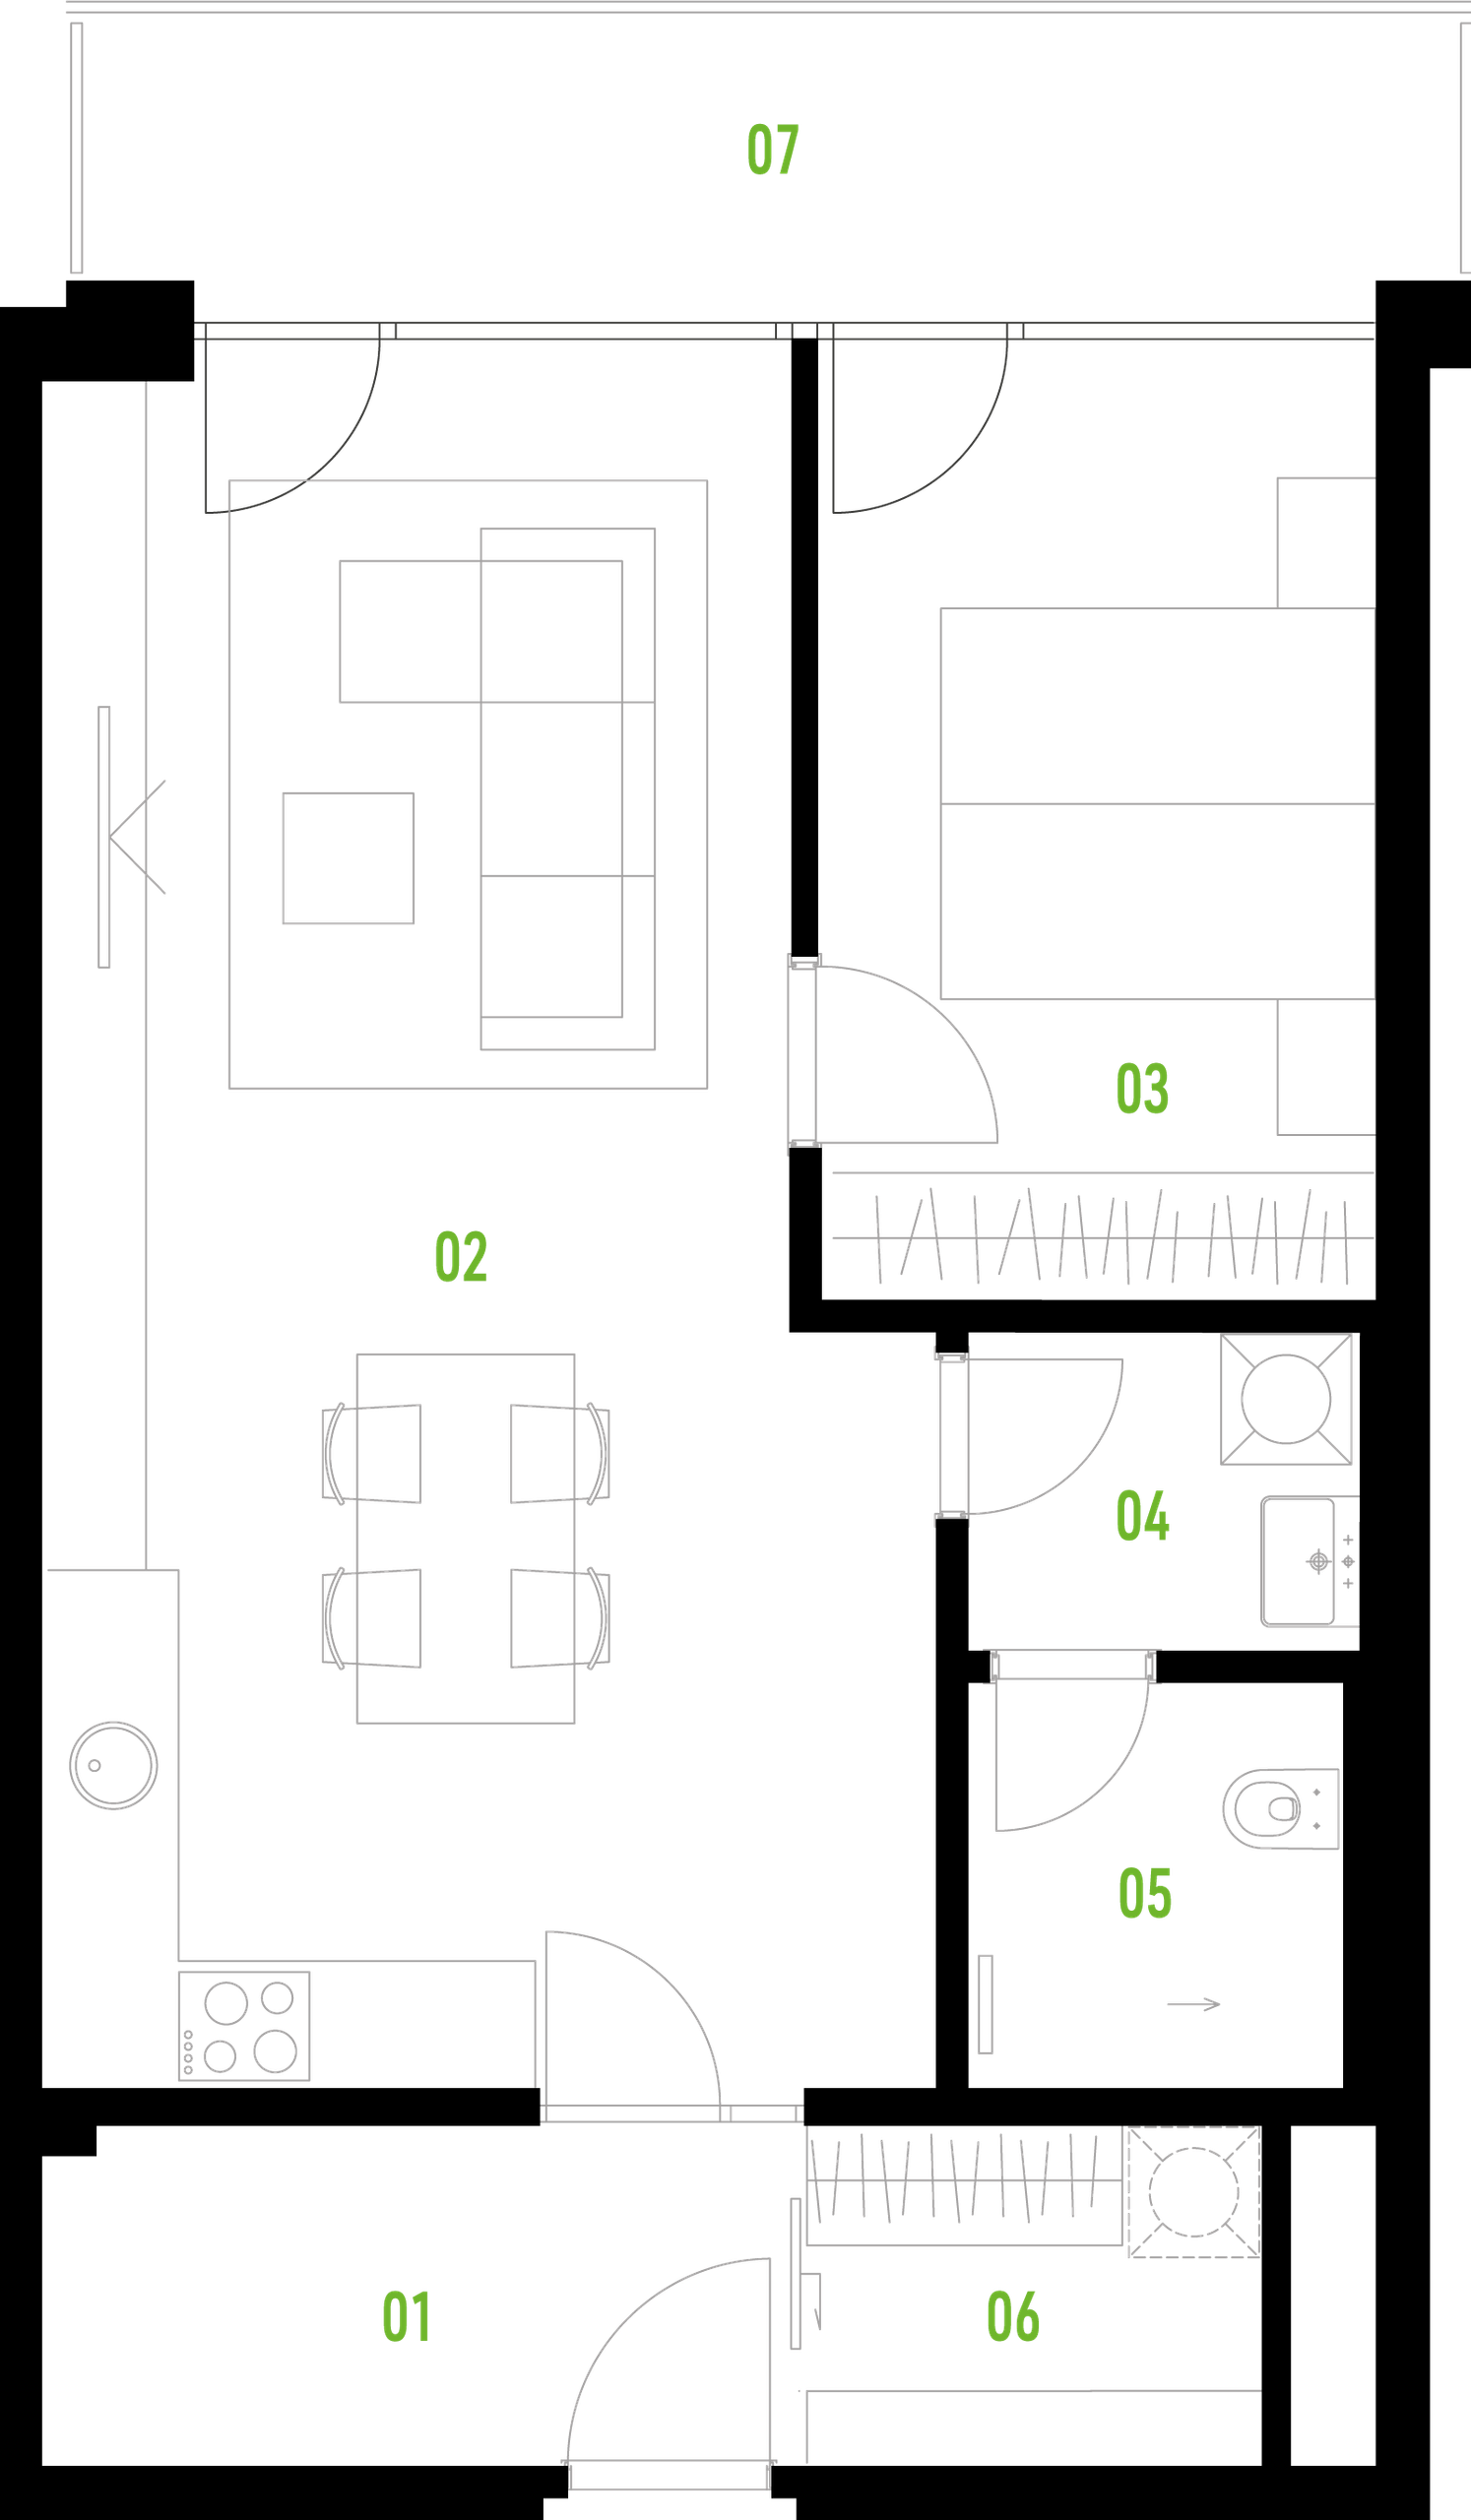 A32 floor plan